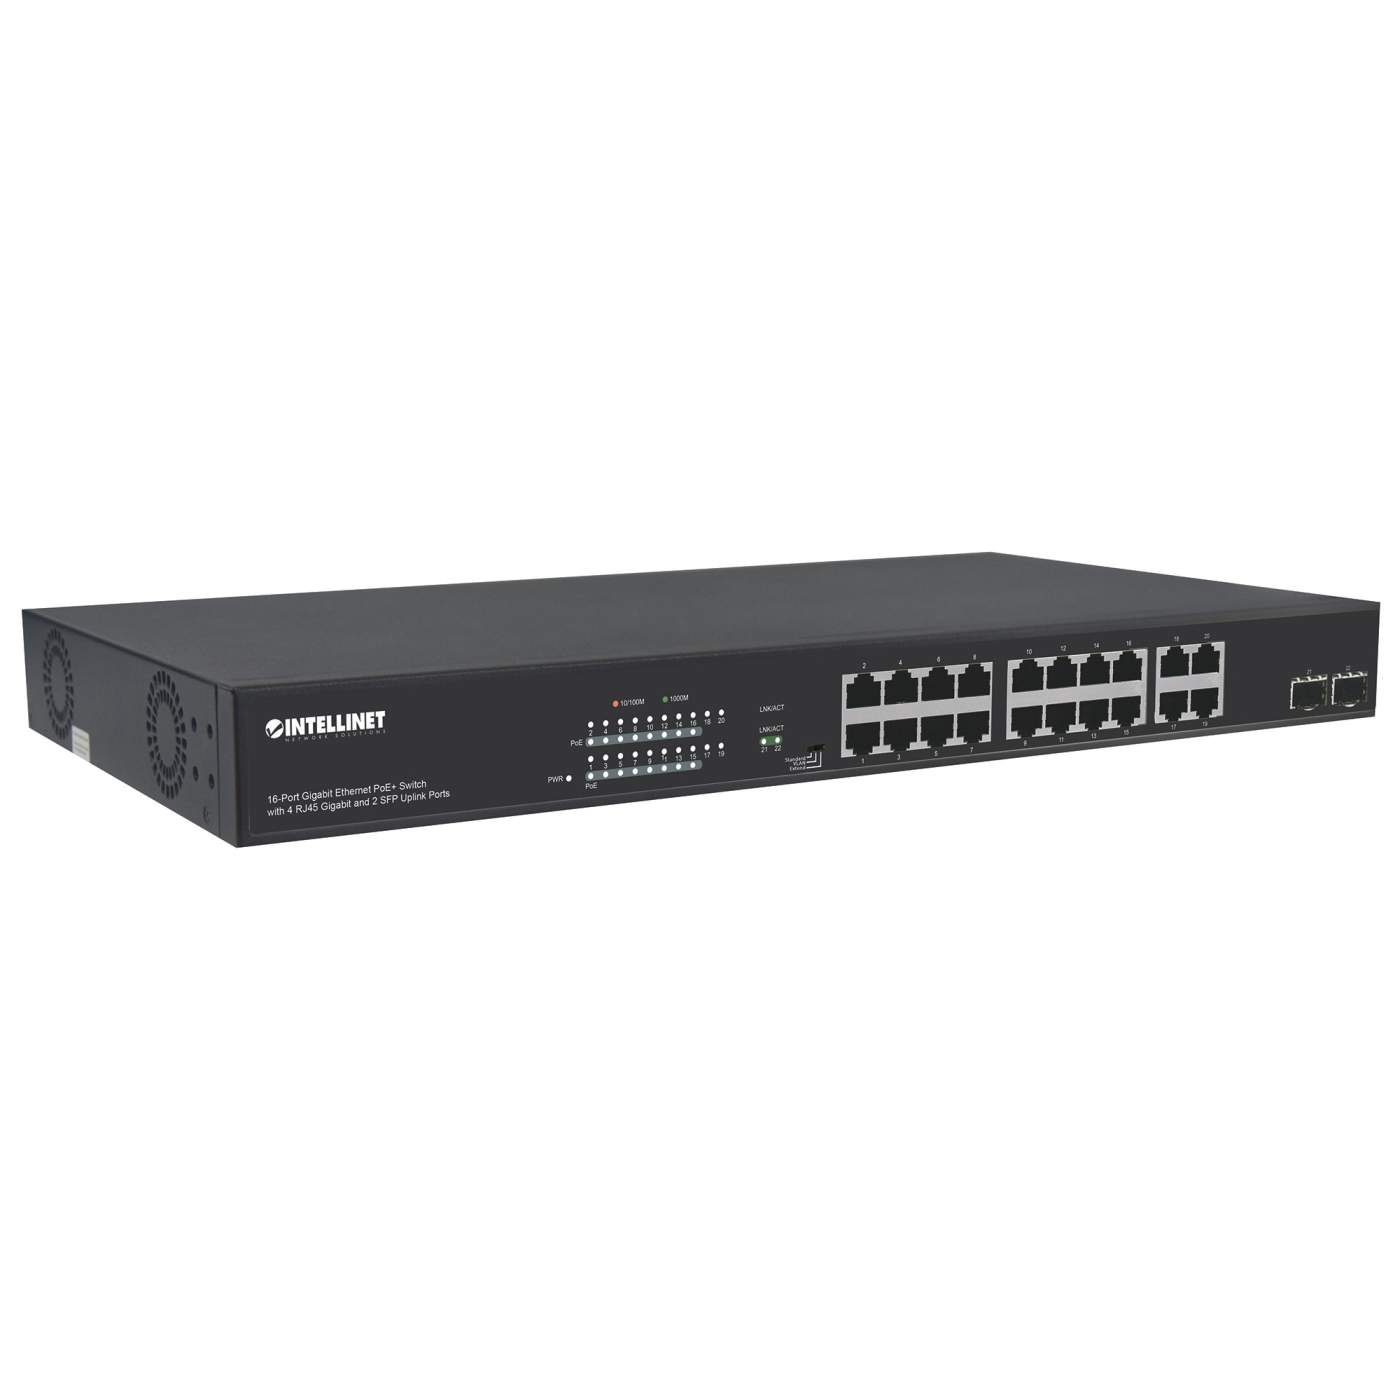 Intellinet 561419 16-Port Gigabit Ethernet PoE+ Switch